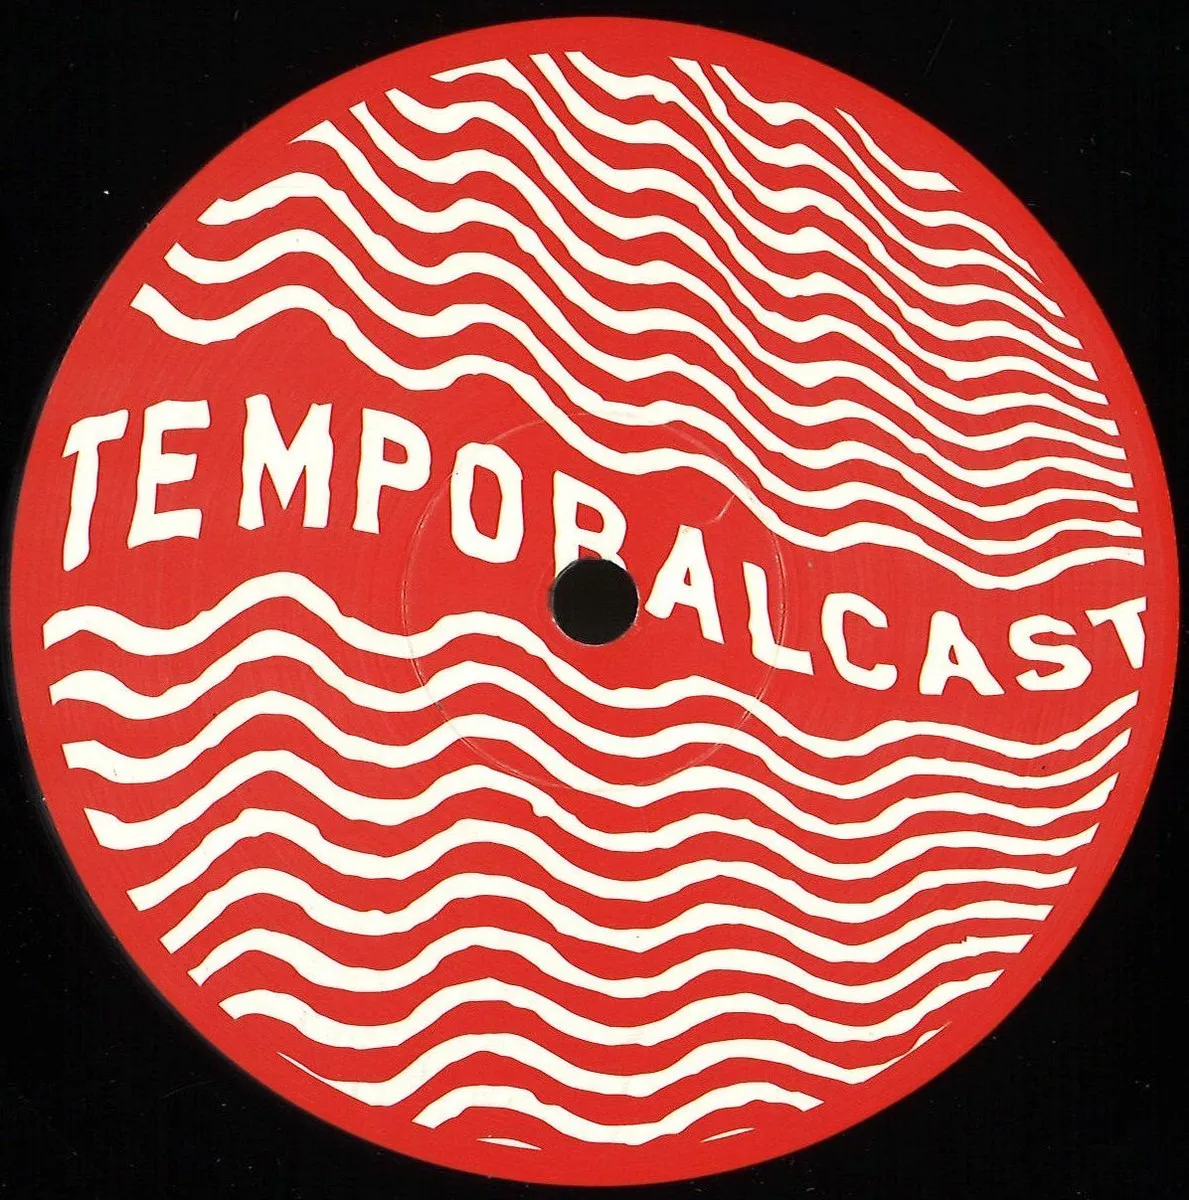 Temporal Cast